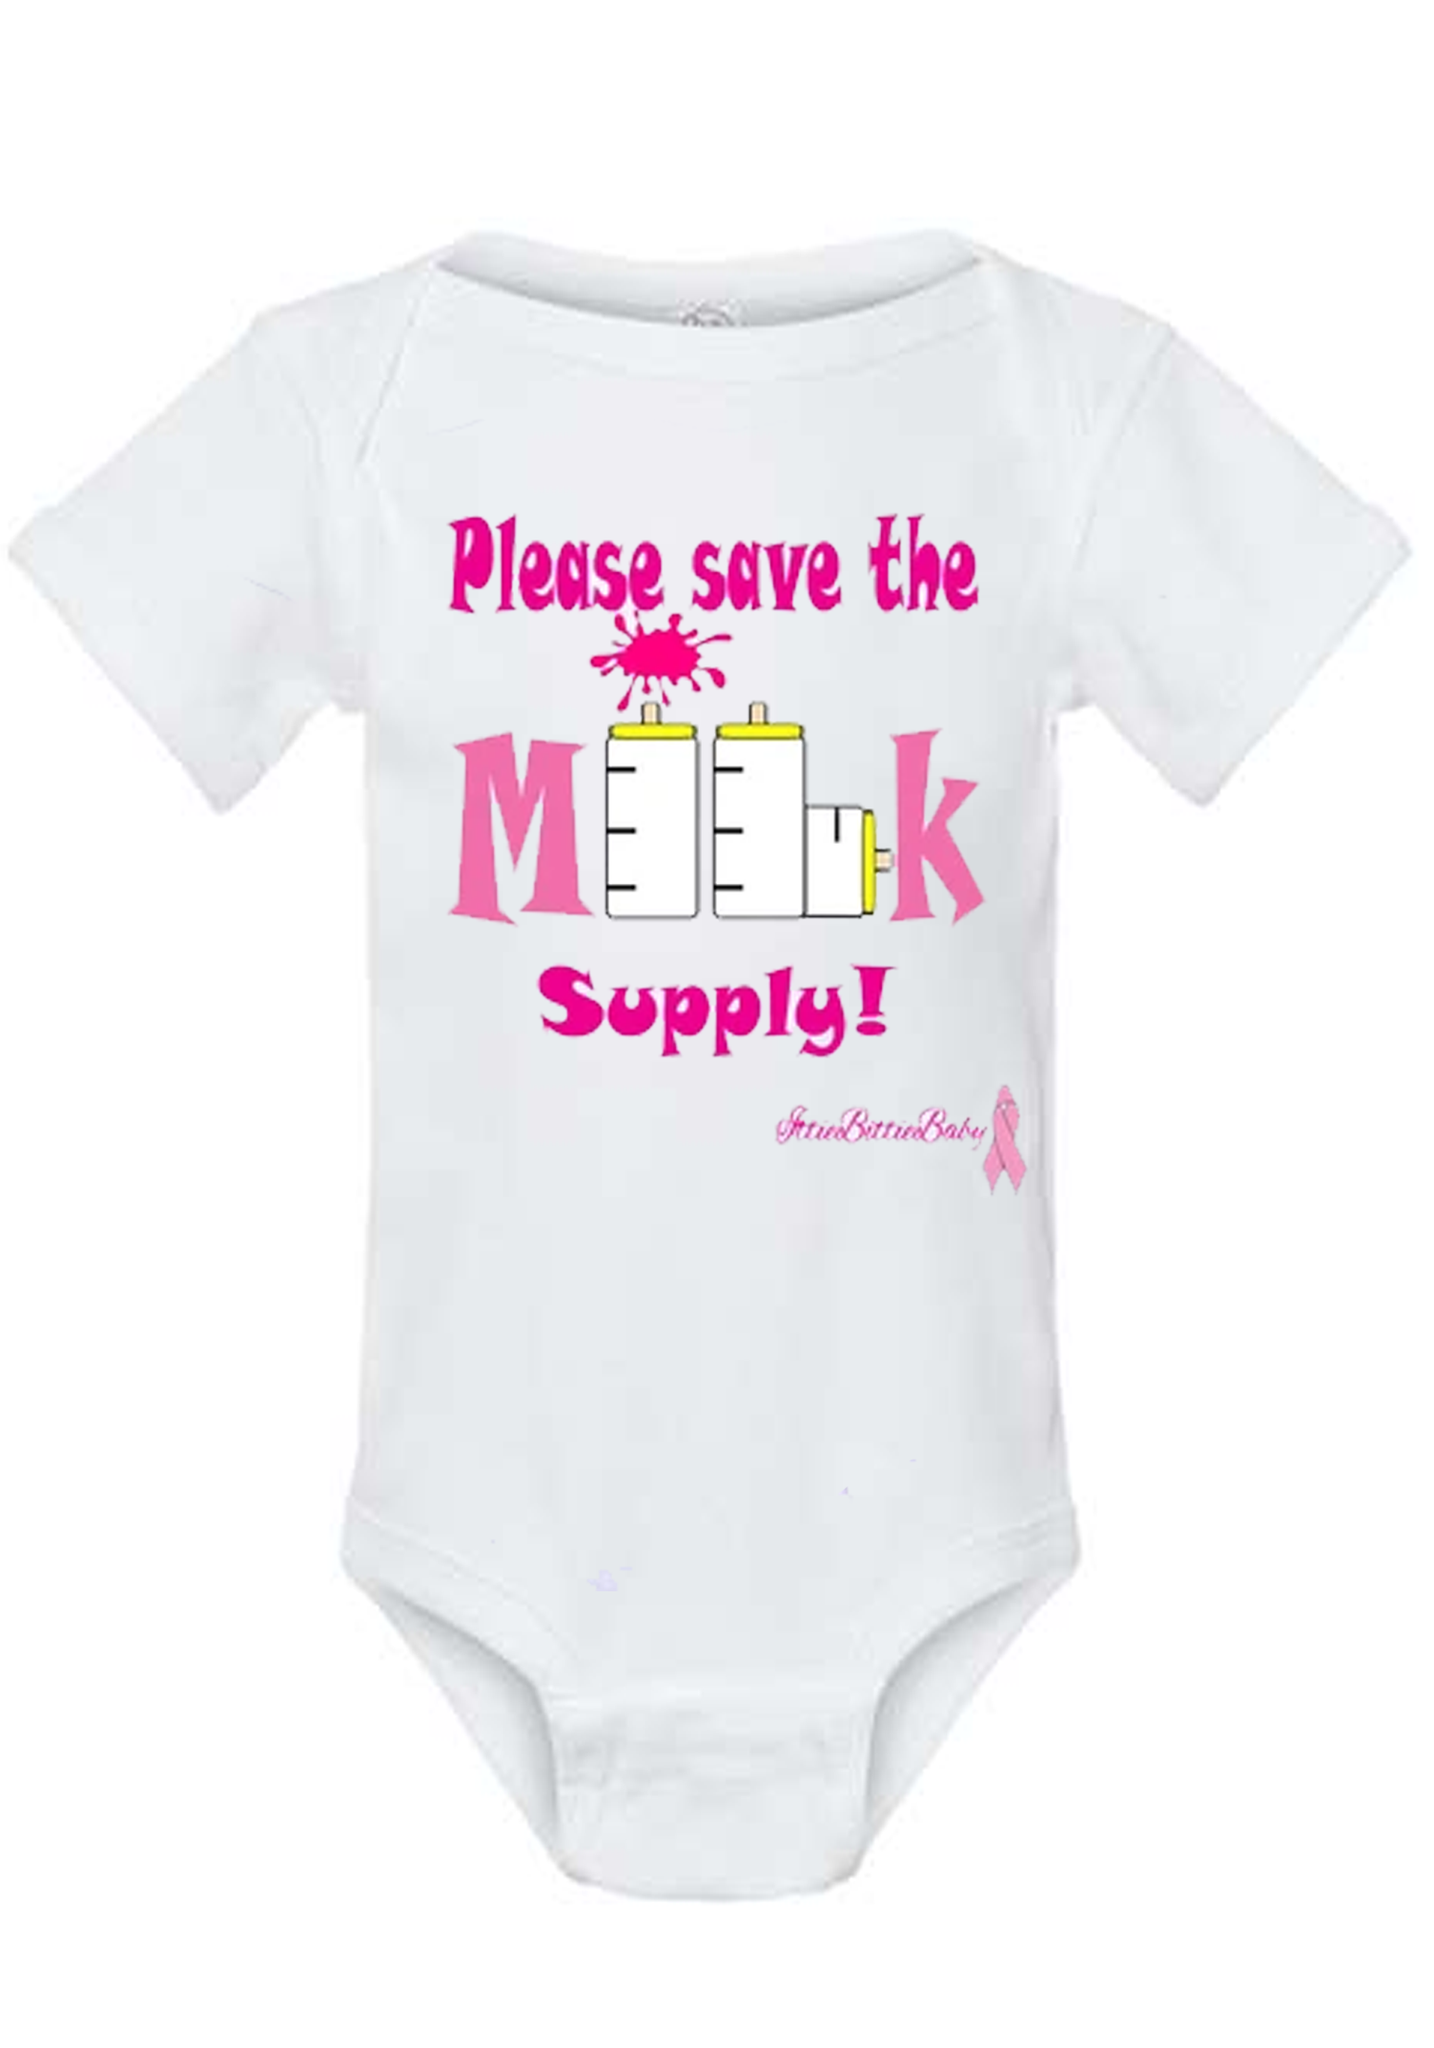 Save the Milk Supply